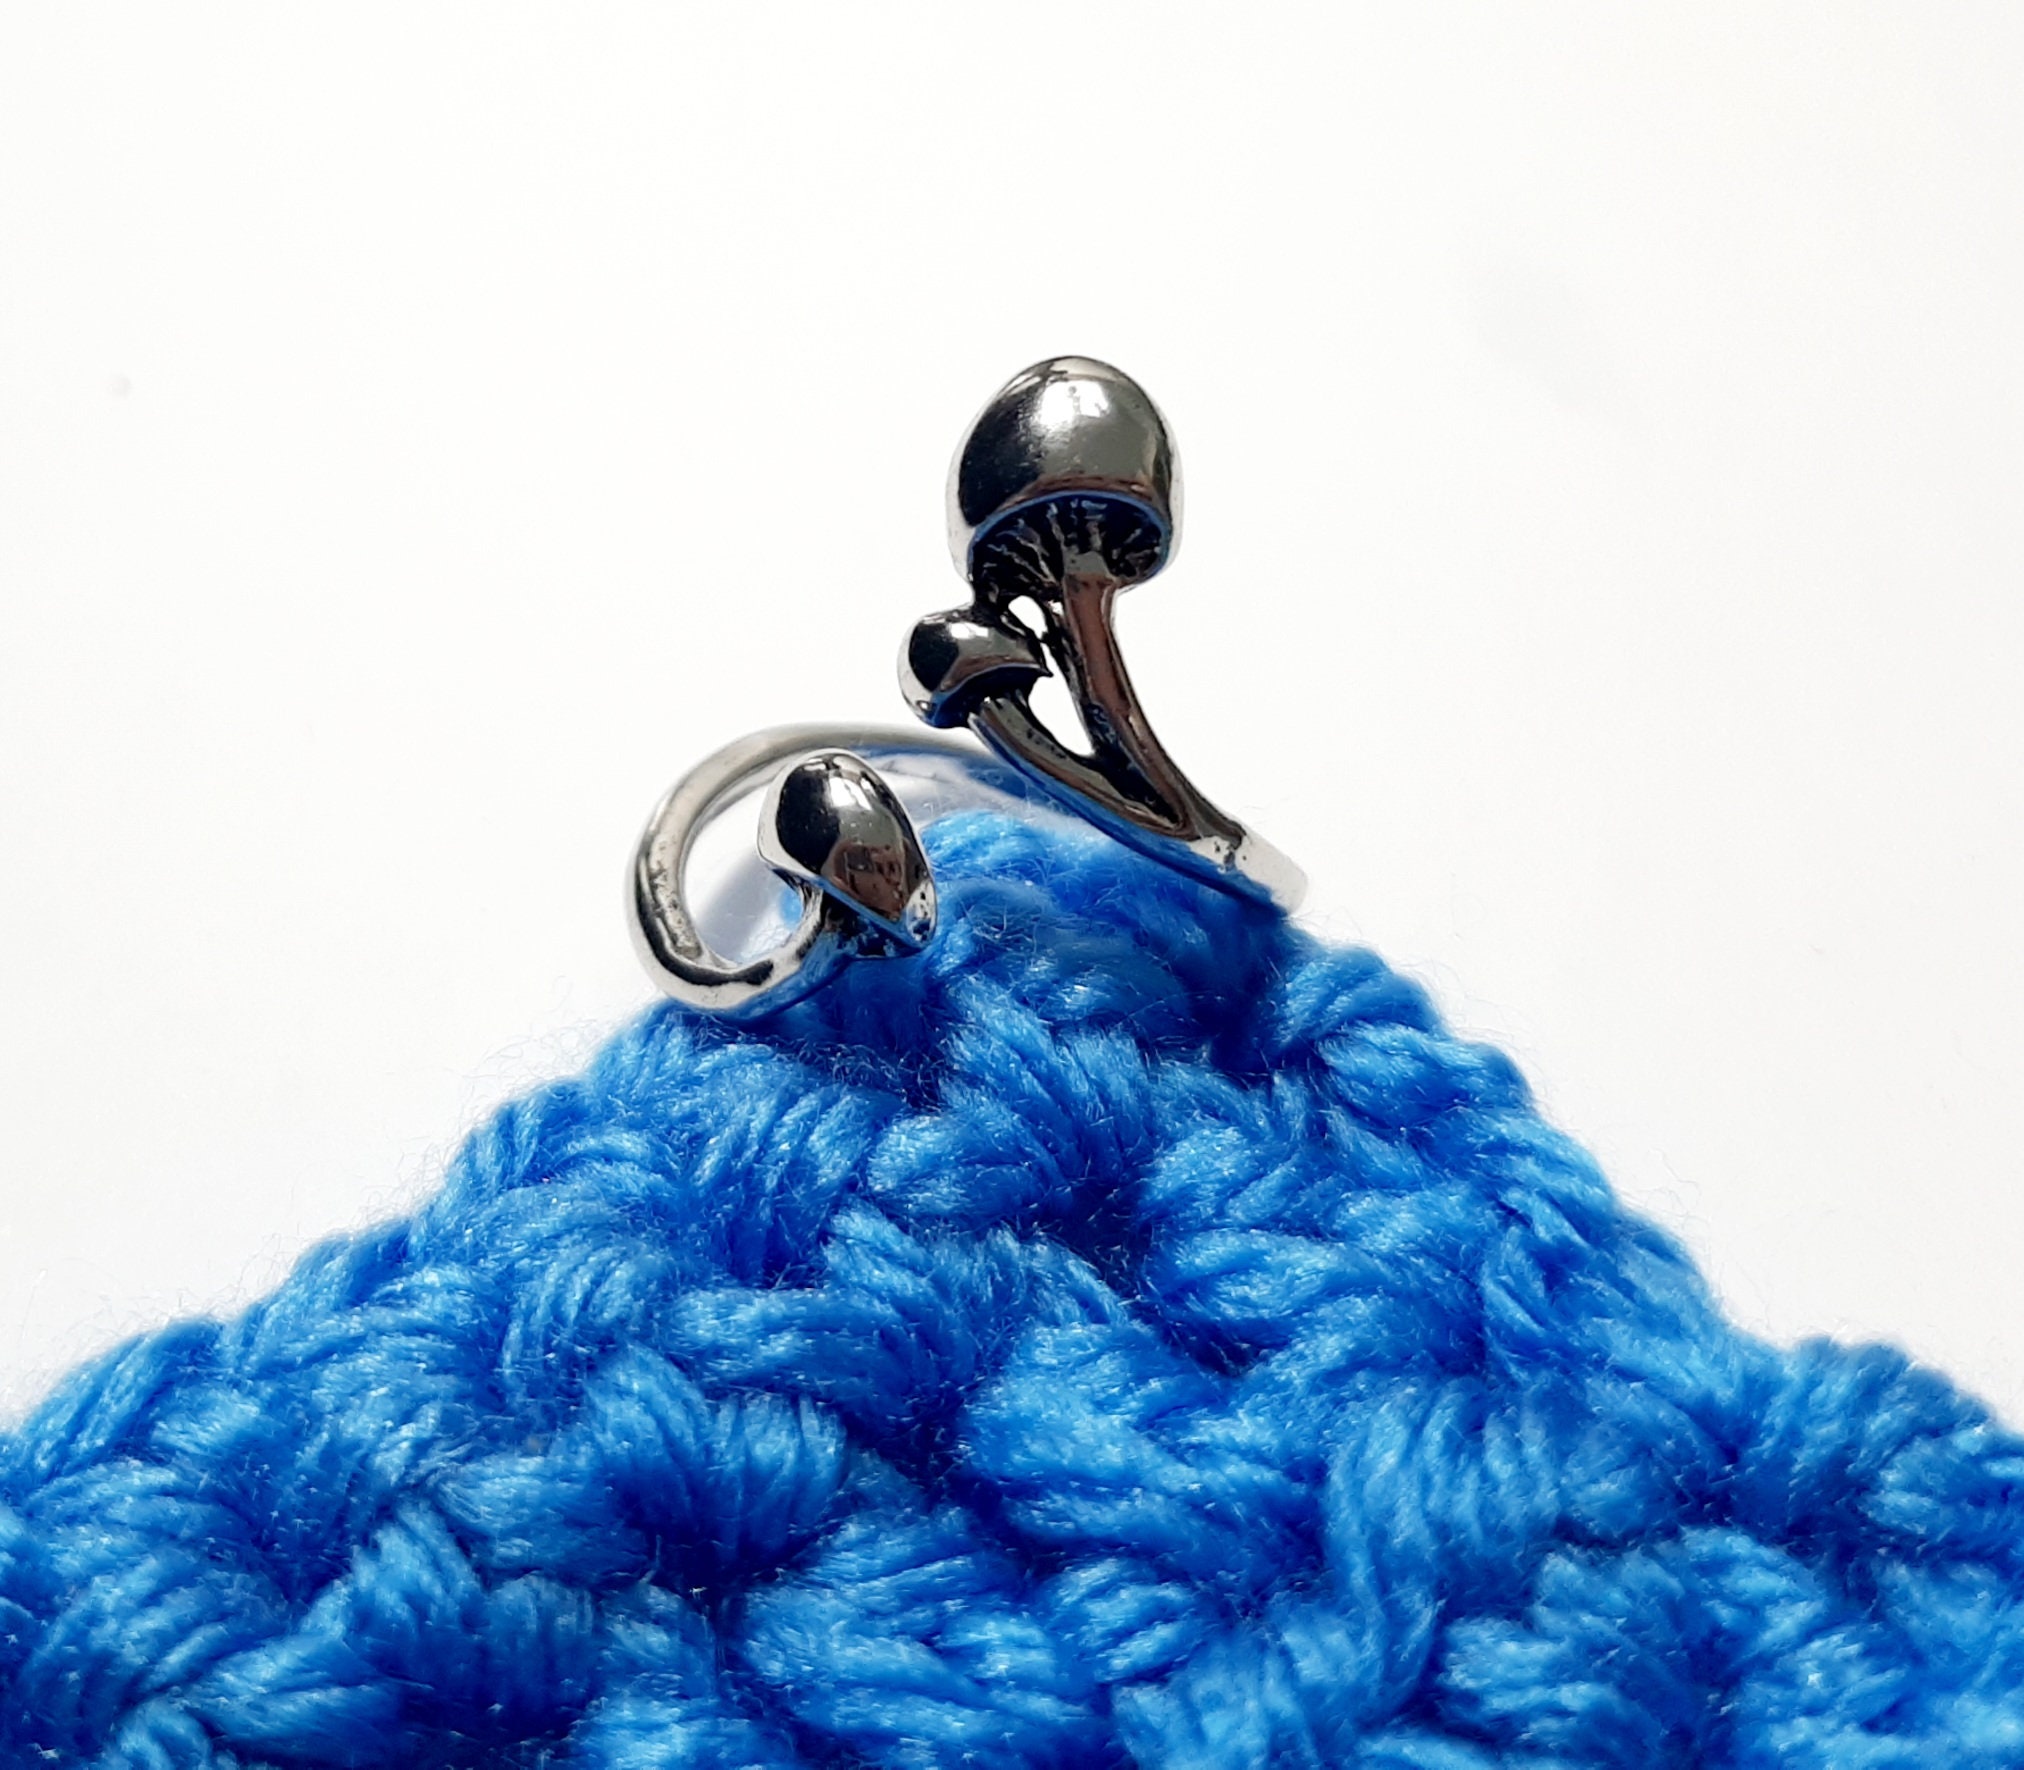 Knitting Ring Adjustable Fingers Metal Open Yarn Guide Crochet Tension Ring  Knitting Lo-op Ring For Finger Holders For Crochet